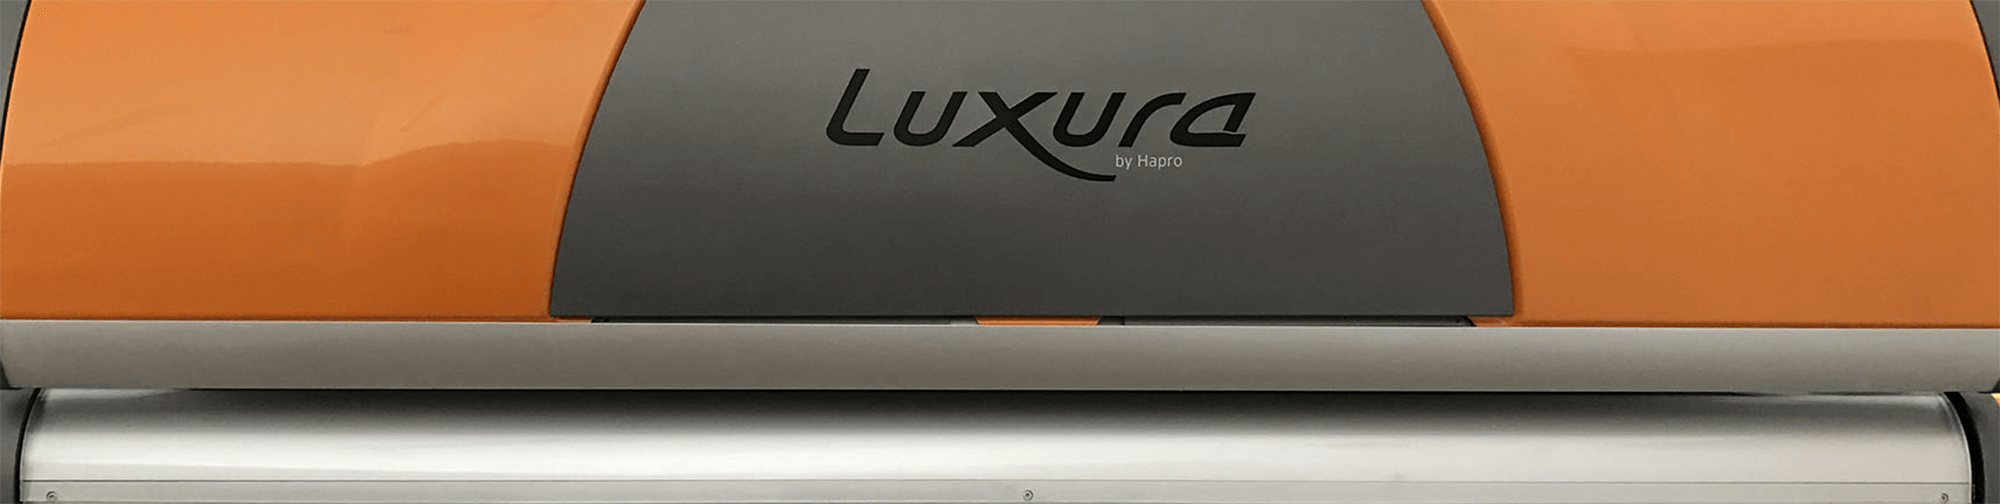 LUXURA X7 42 SLi INTENSIVE